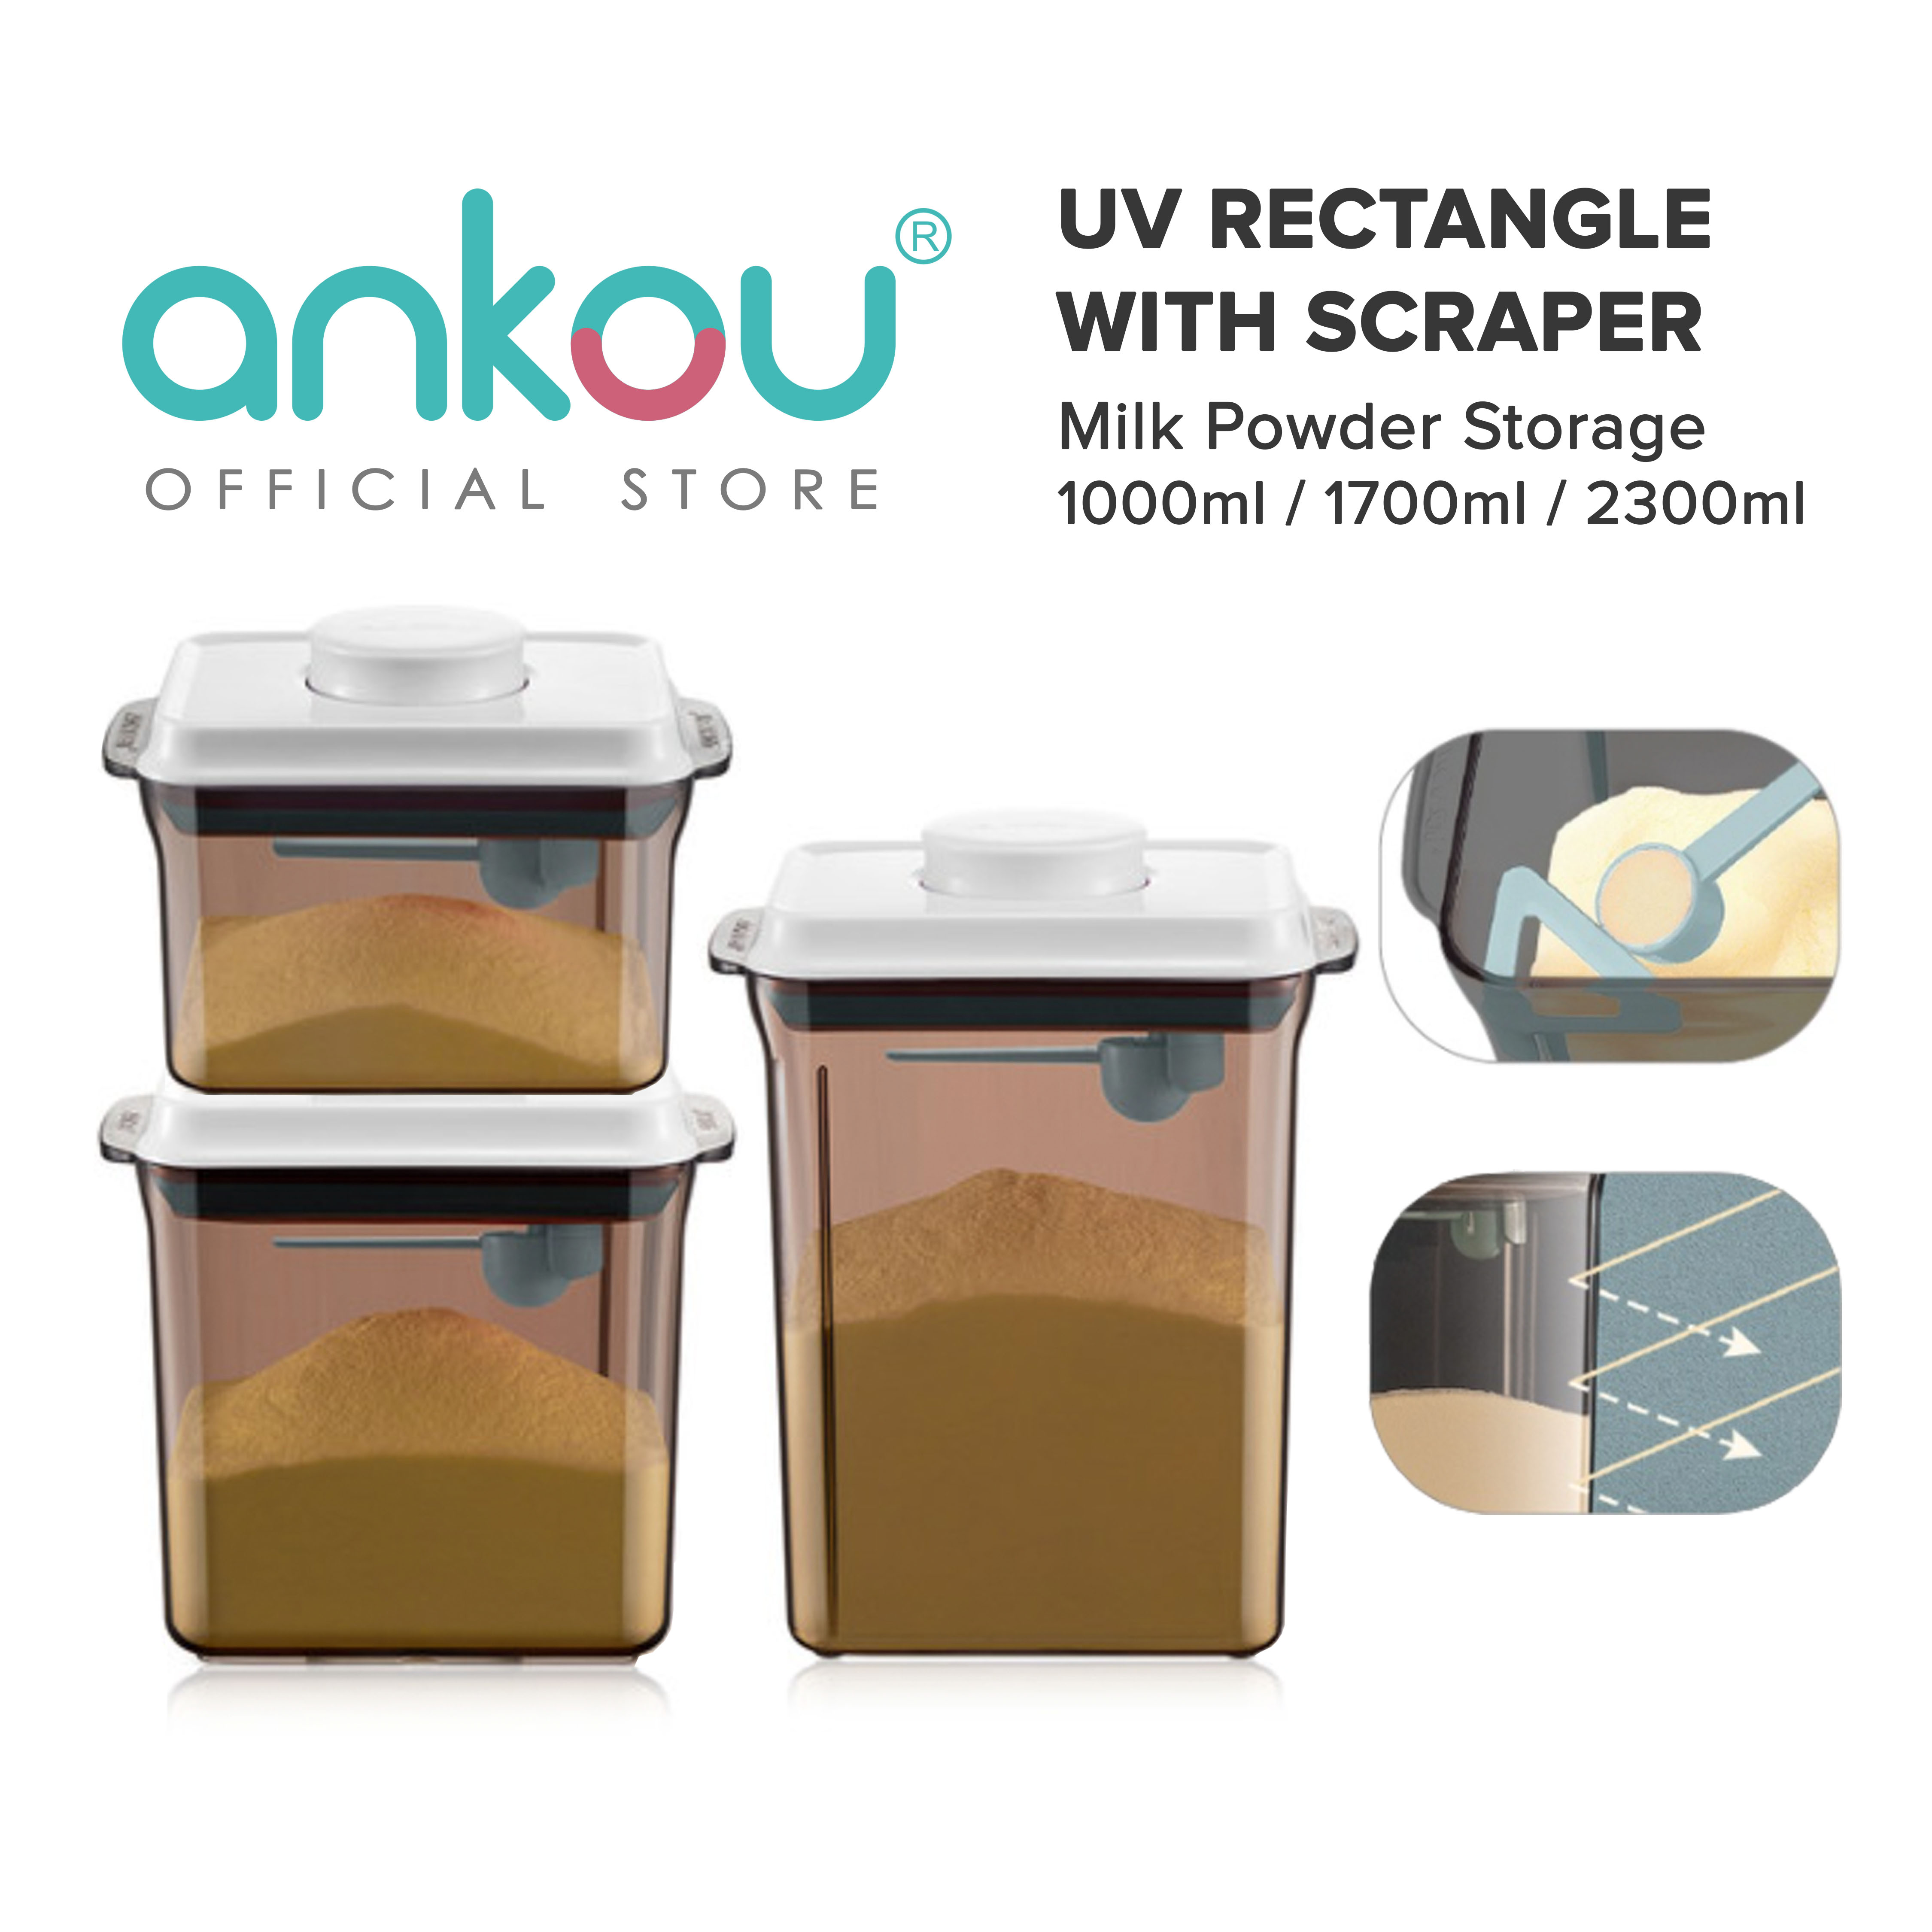 ANKOU Air Tight Milk Powder Container with Scraper - UV Rectangle